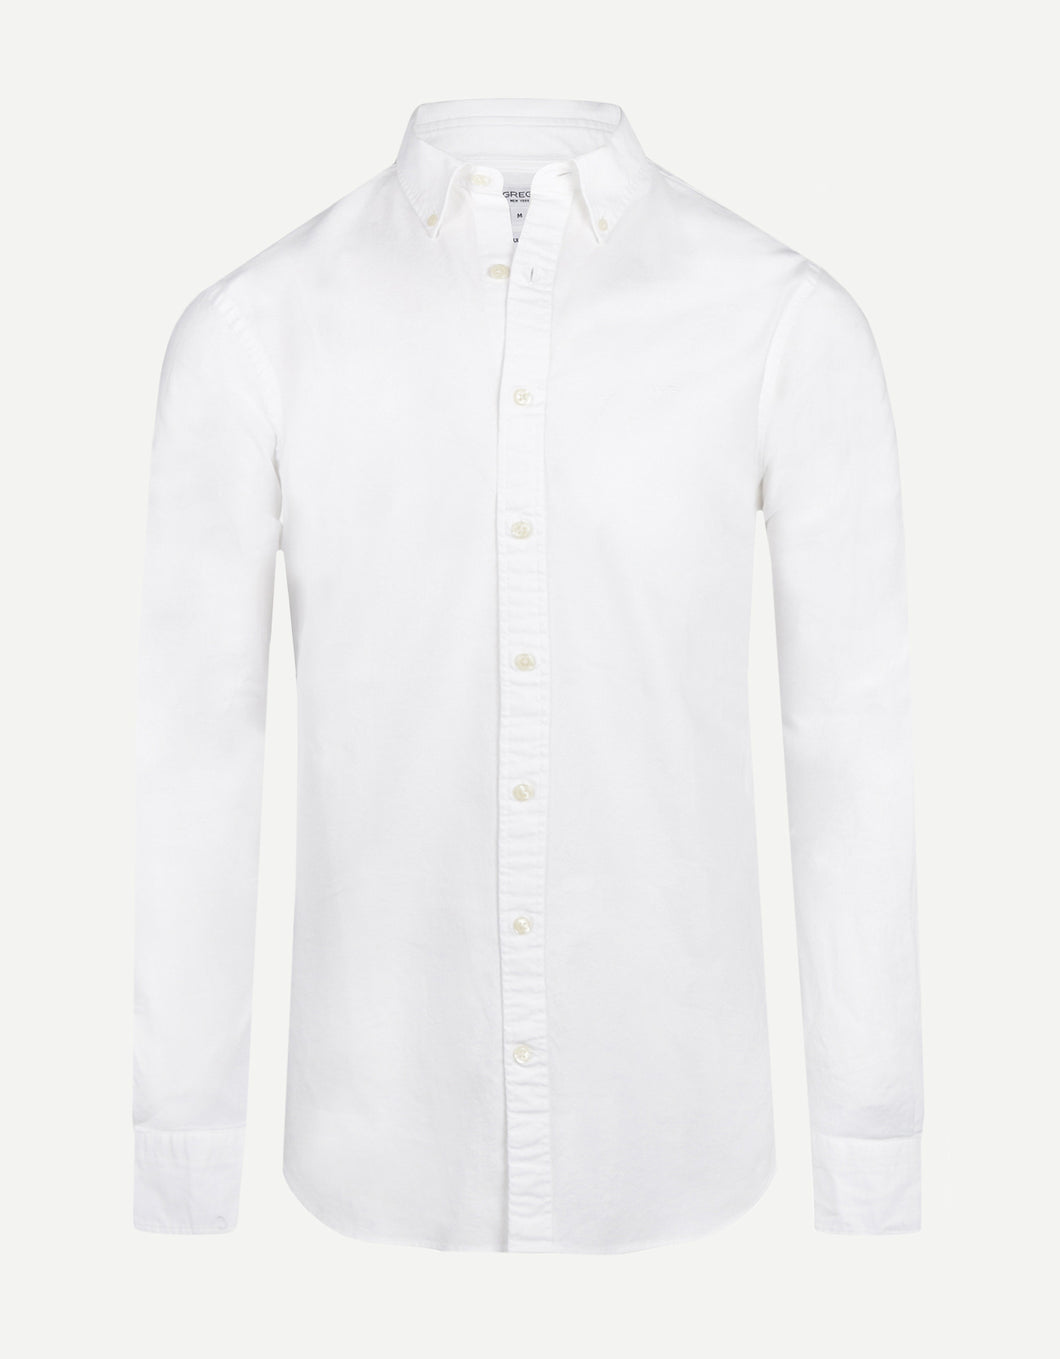 McGregor, Oxford Button-Down White Shirt